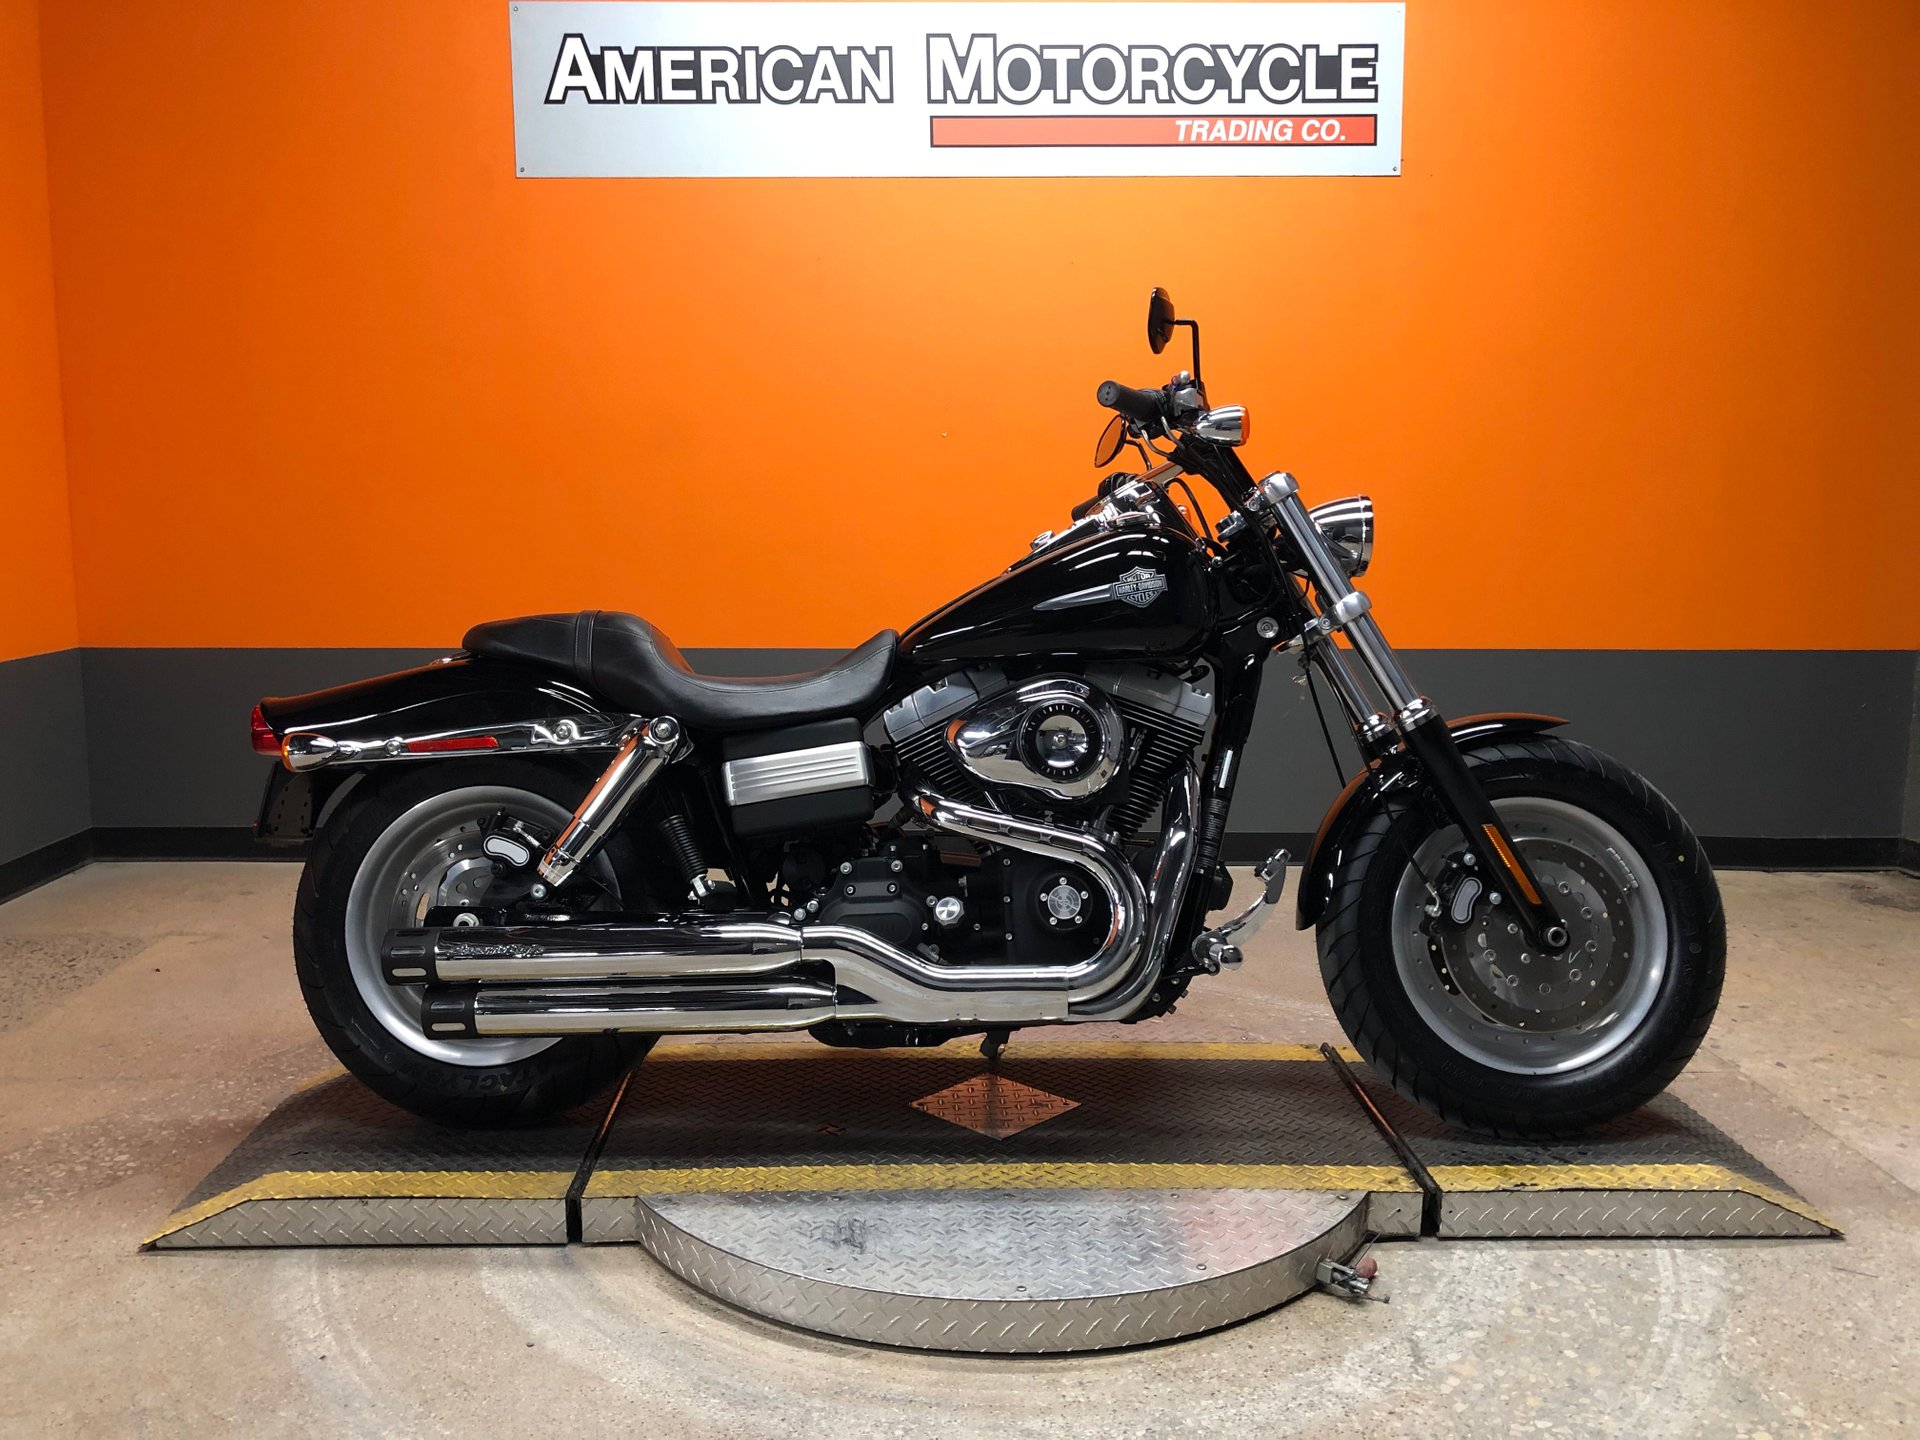 2009 Harley-Davidson Dyna Fat Bob | American Motorcycle Trading Company -  Used Harley Davidson Motorcycles